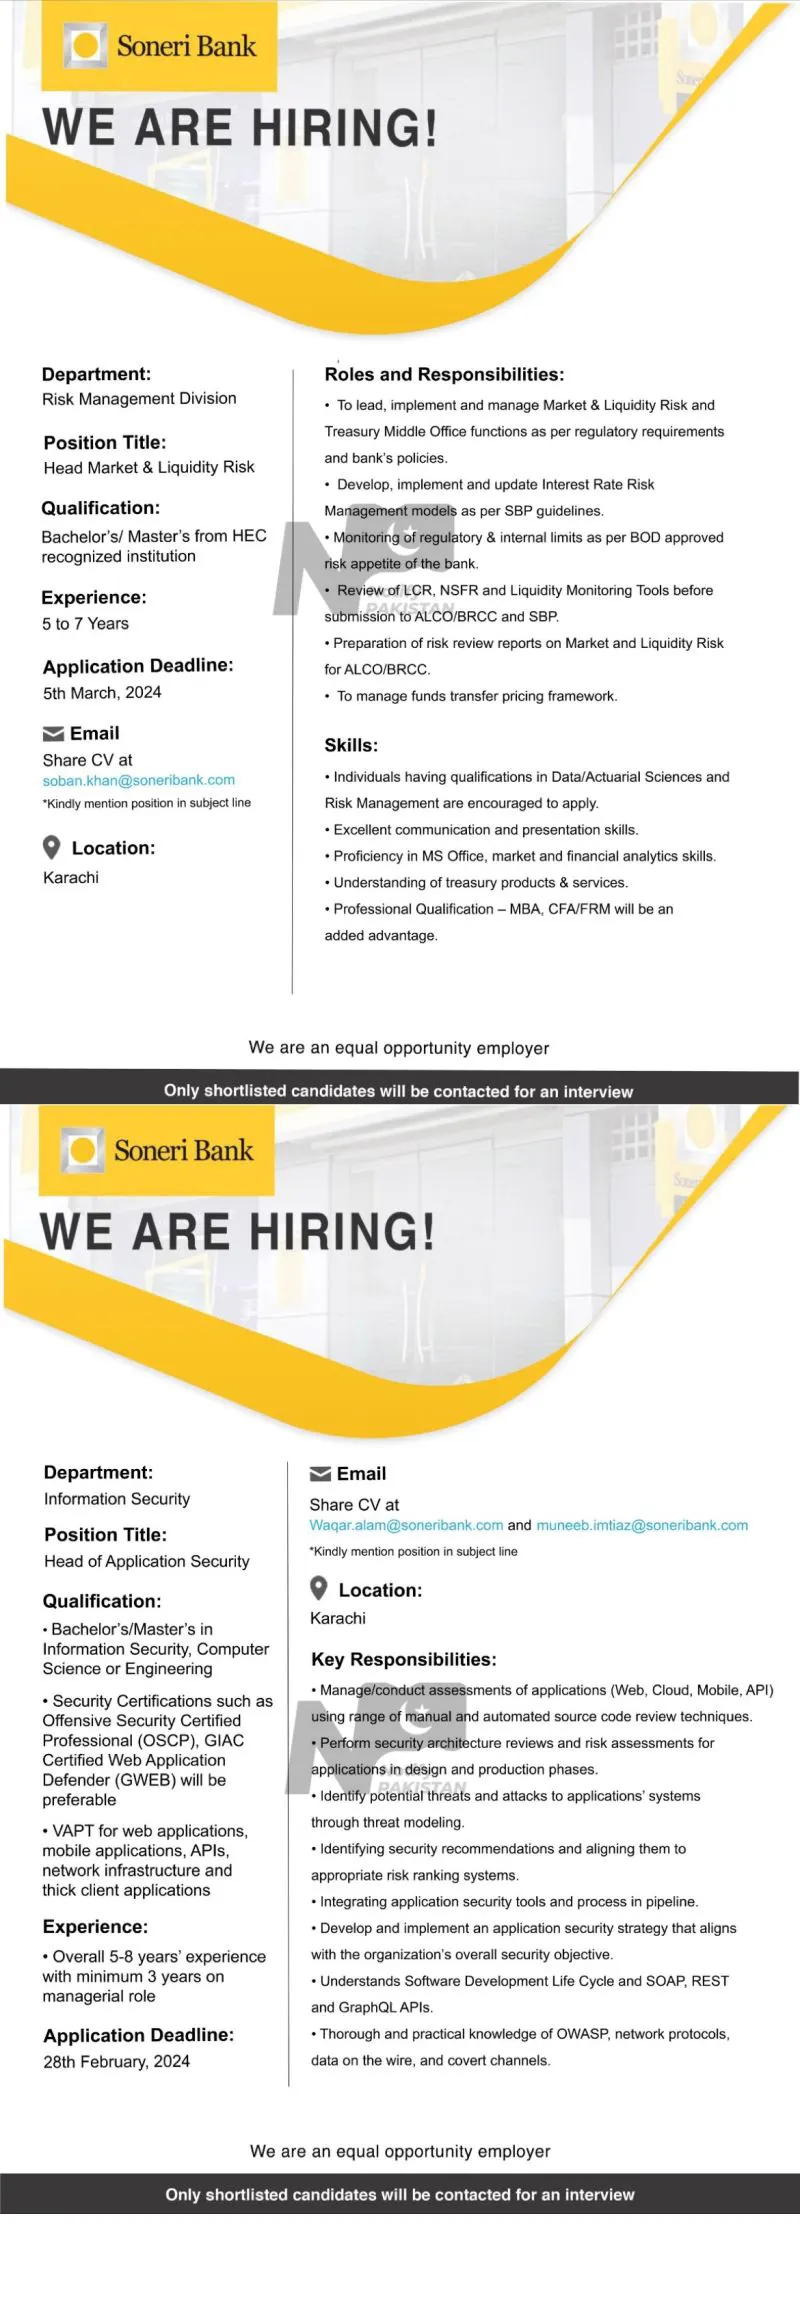 Soneri Bank Careers Advertisement